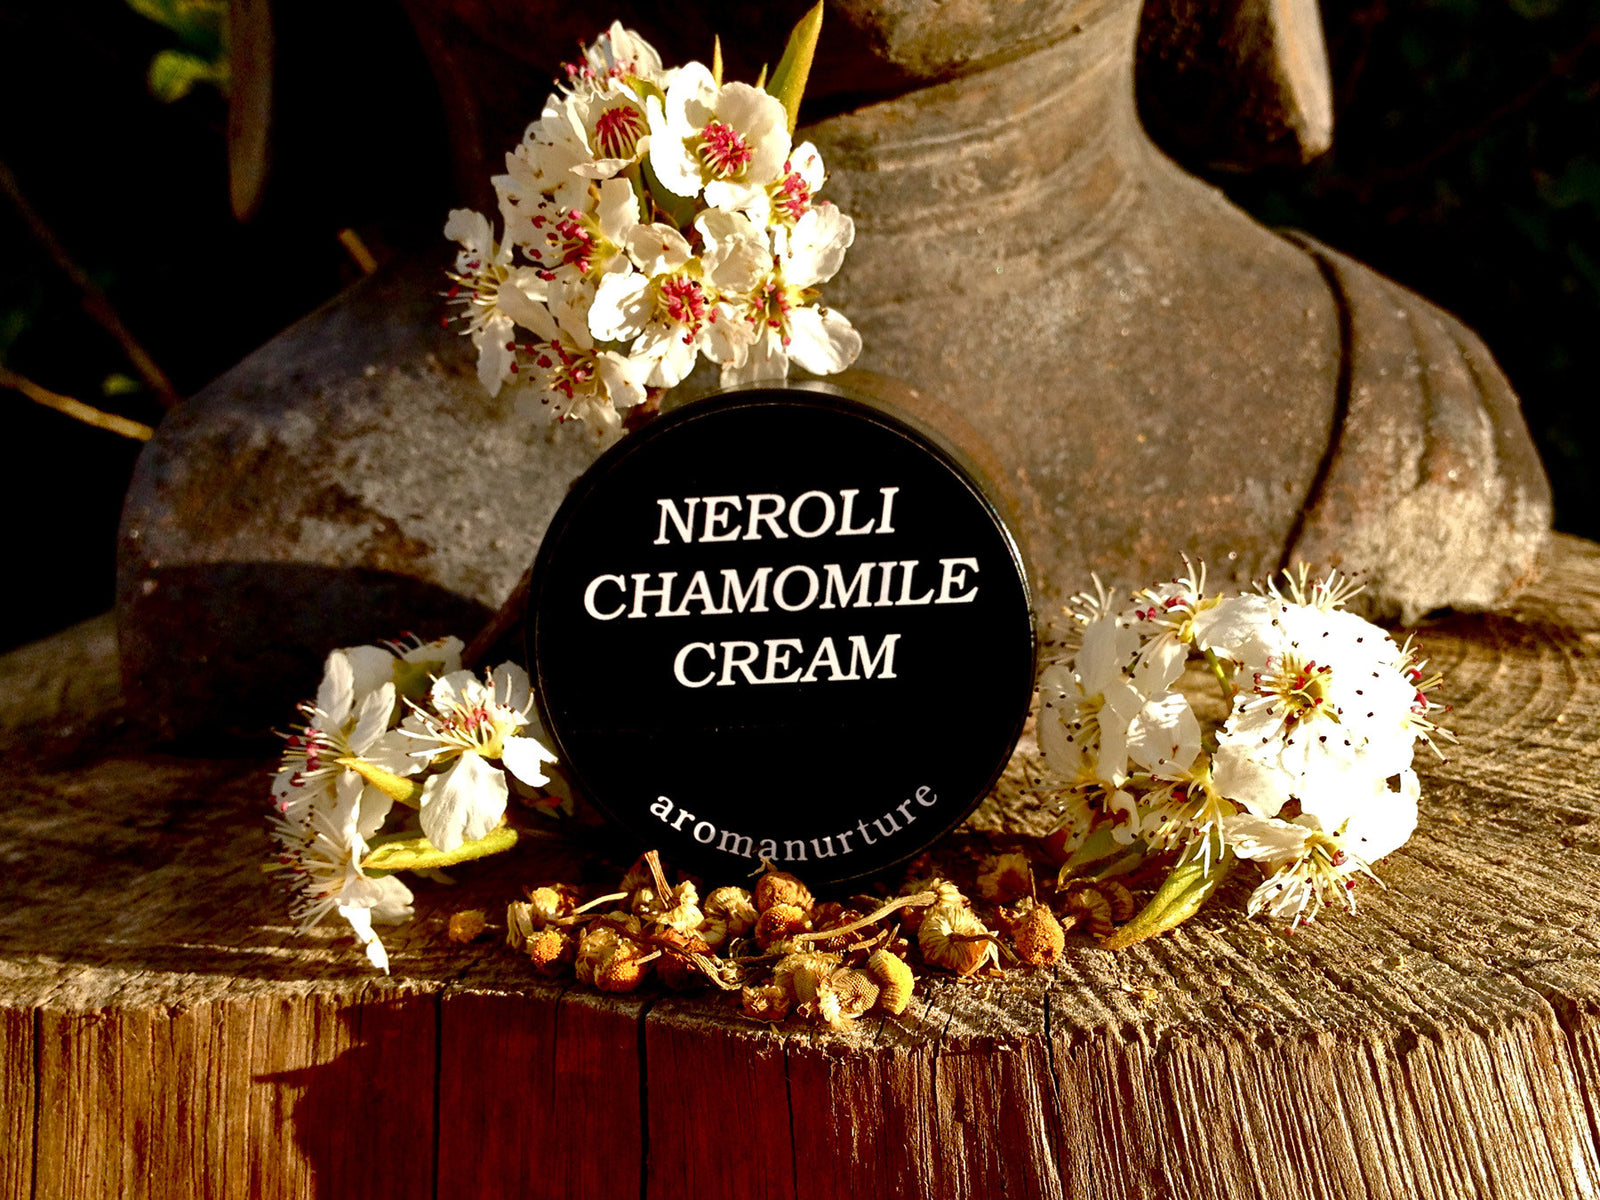 Neroli Chamomile Cream